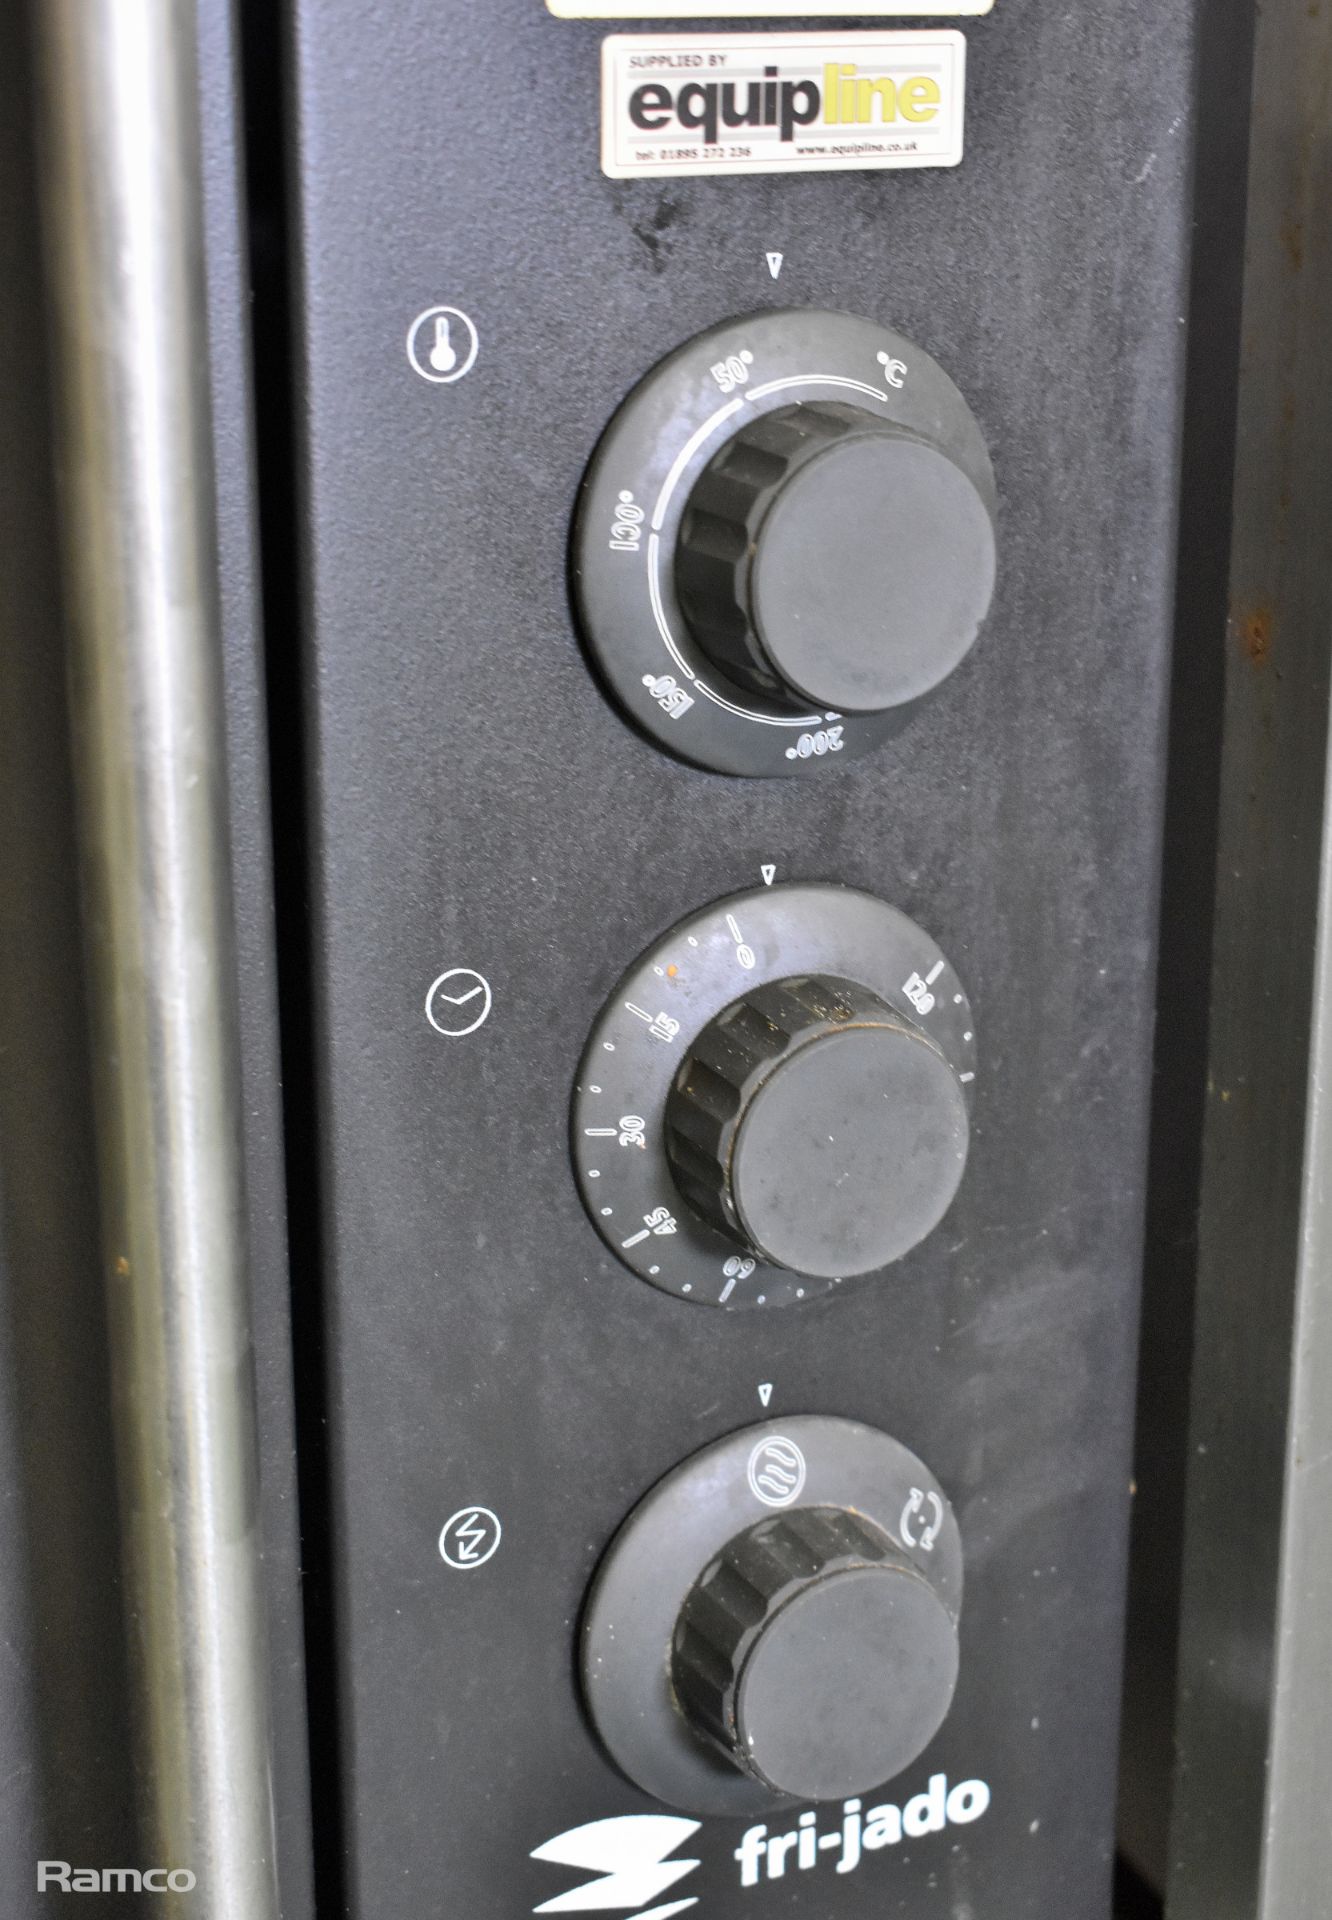 2x Fri-Jado TG110-M electric rotisserie ovens - 84 x 55 x 75cm, Stainless steel trolley - Image 7 of 7